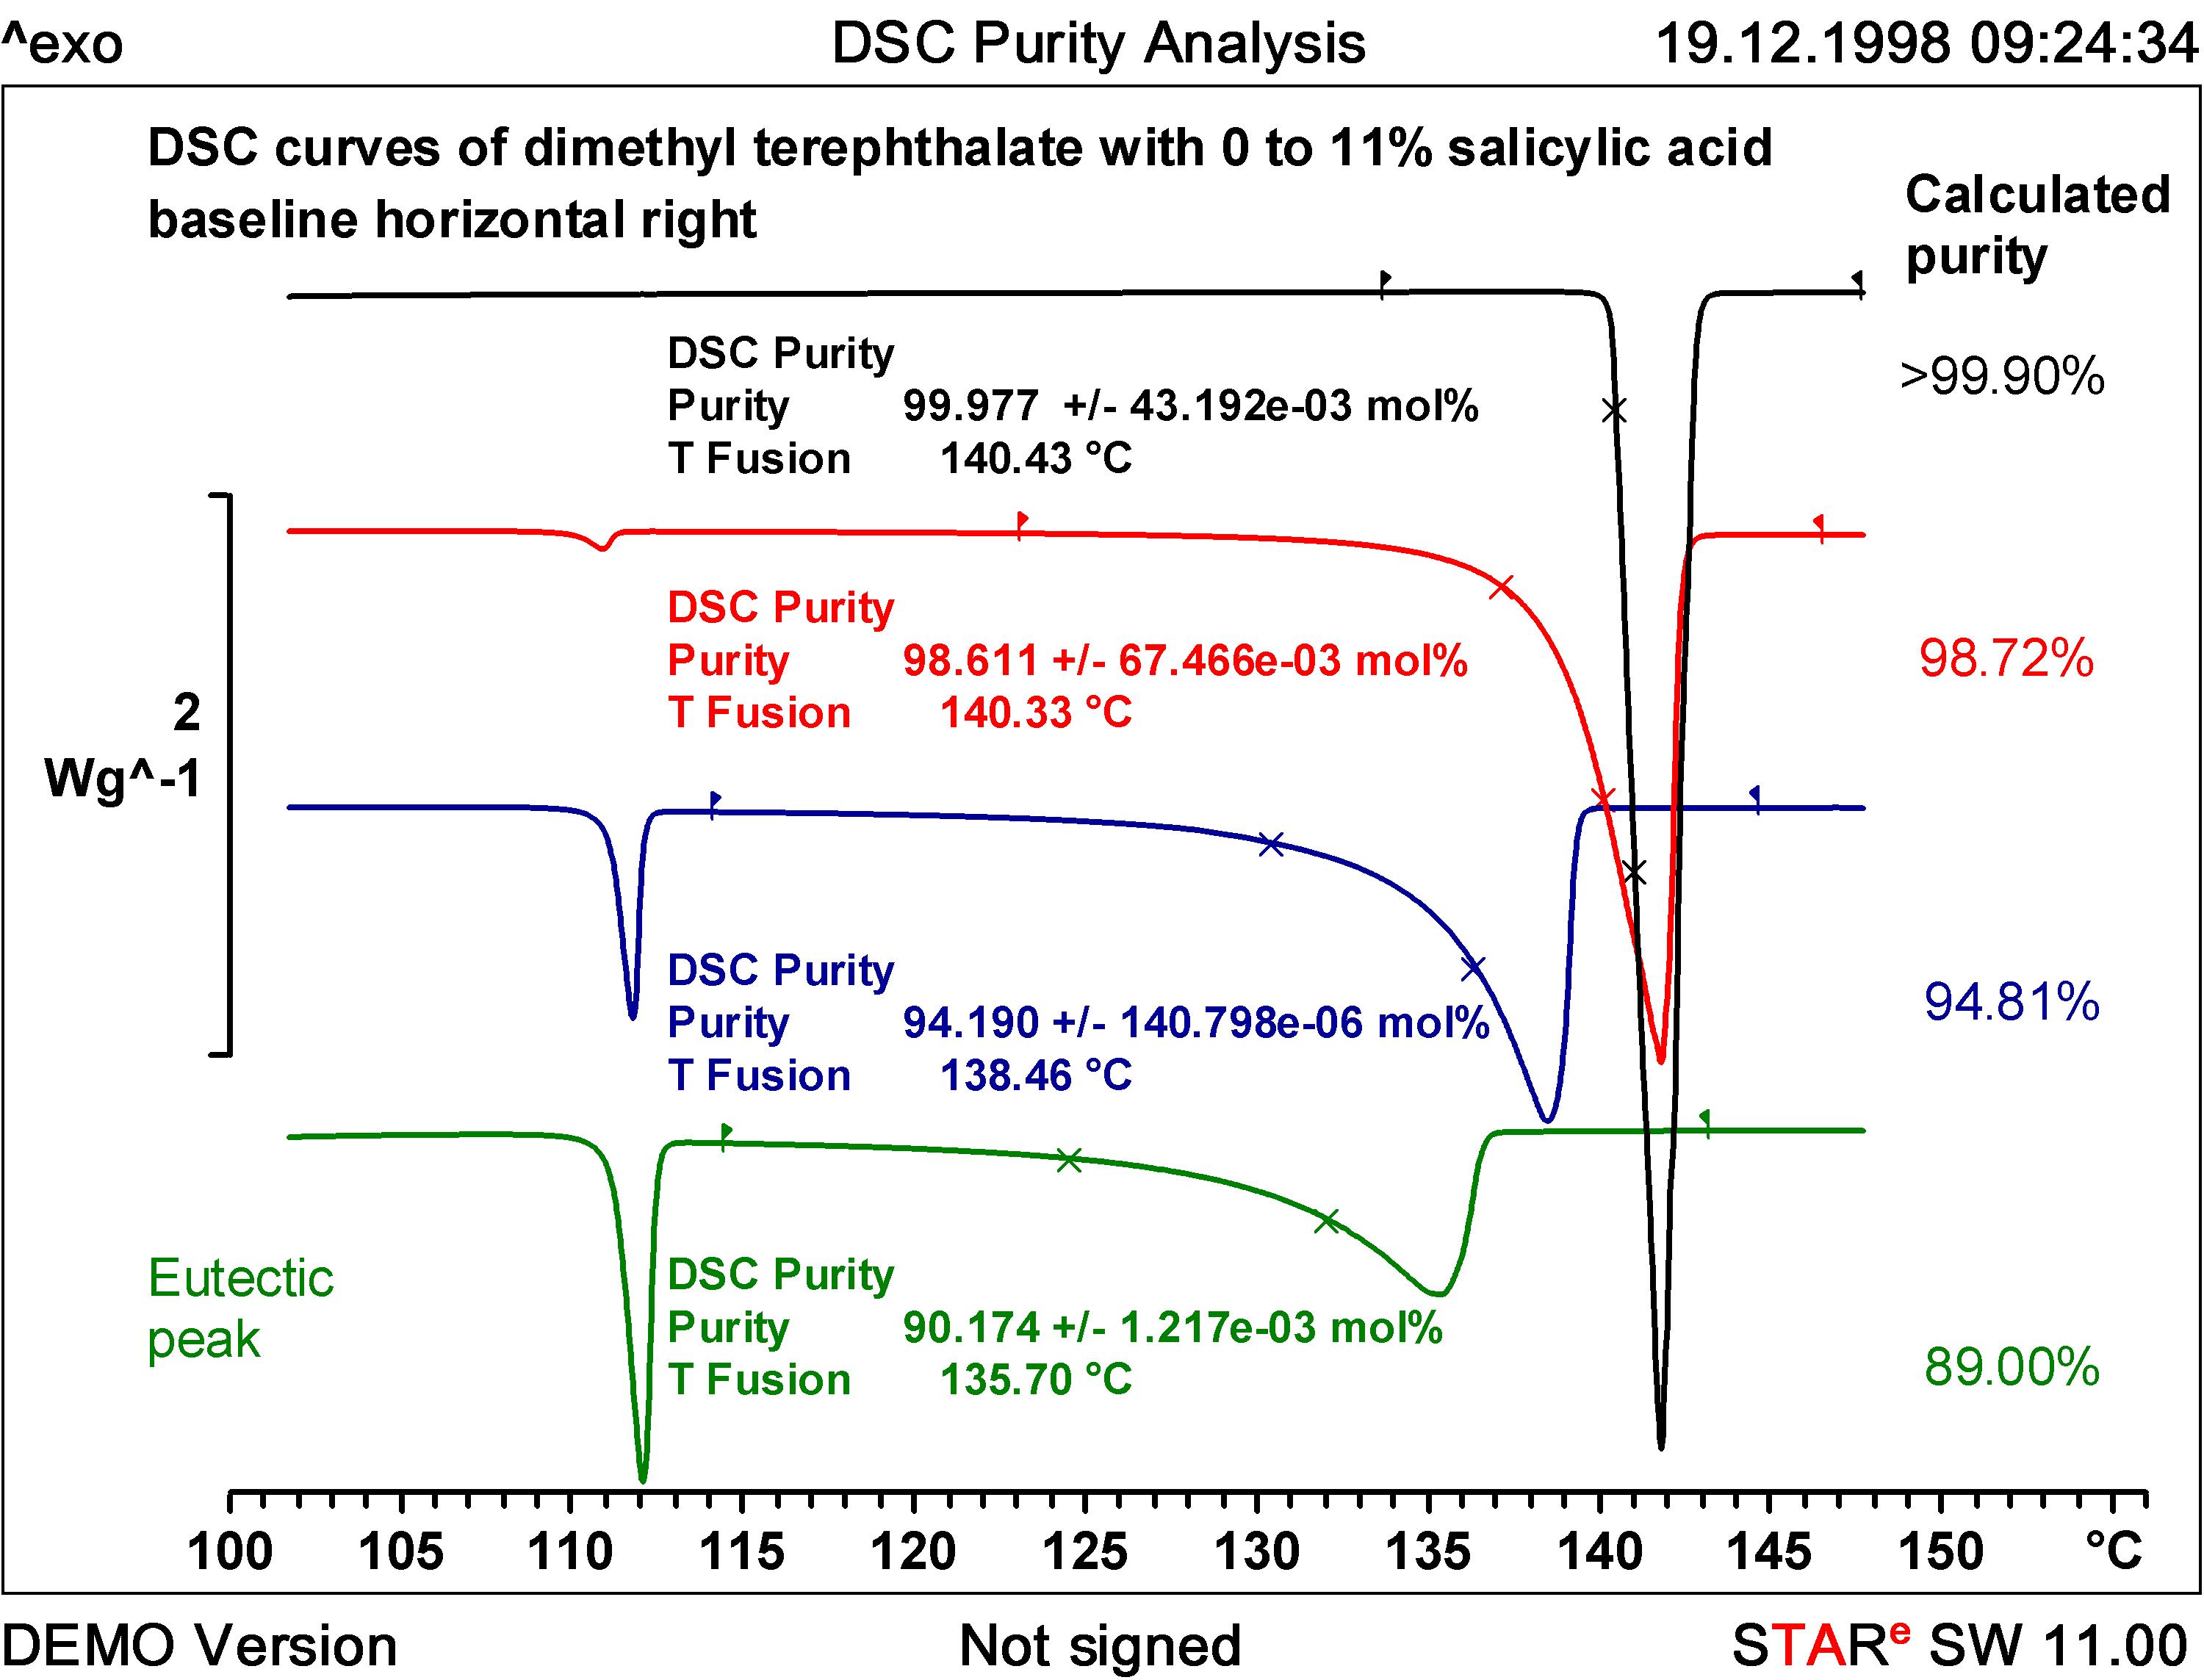 Applying DSC to purity analysis